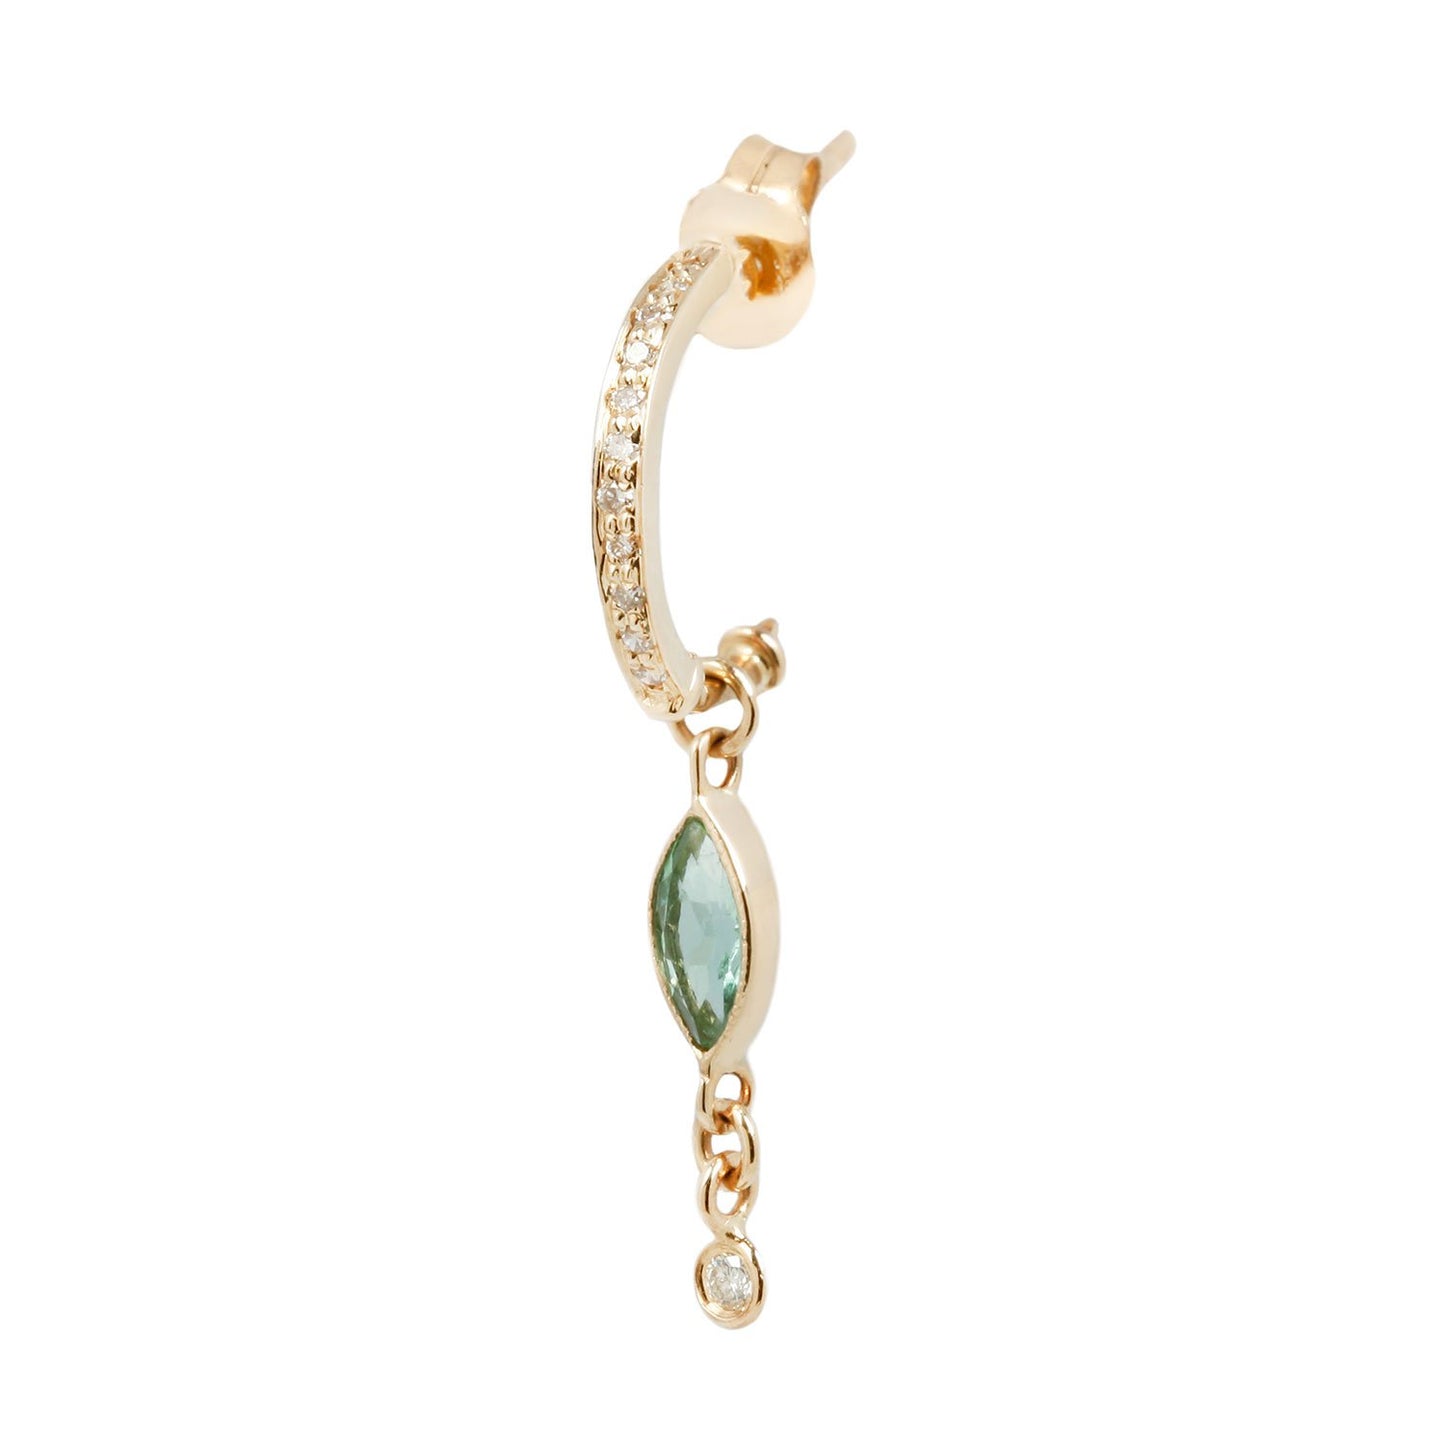 Celine D'Aoust diamond hoop and green tourmaline earring